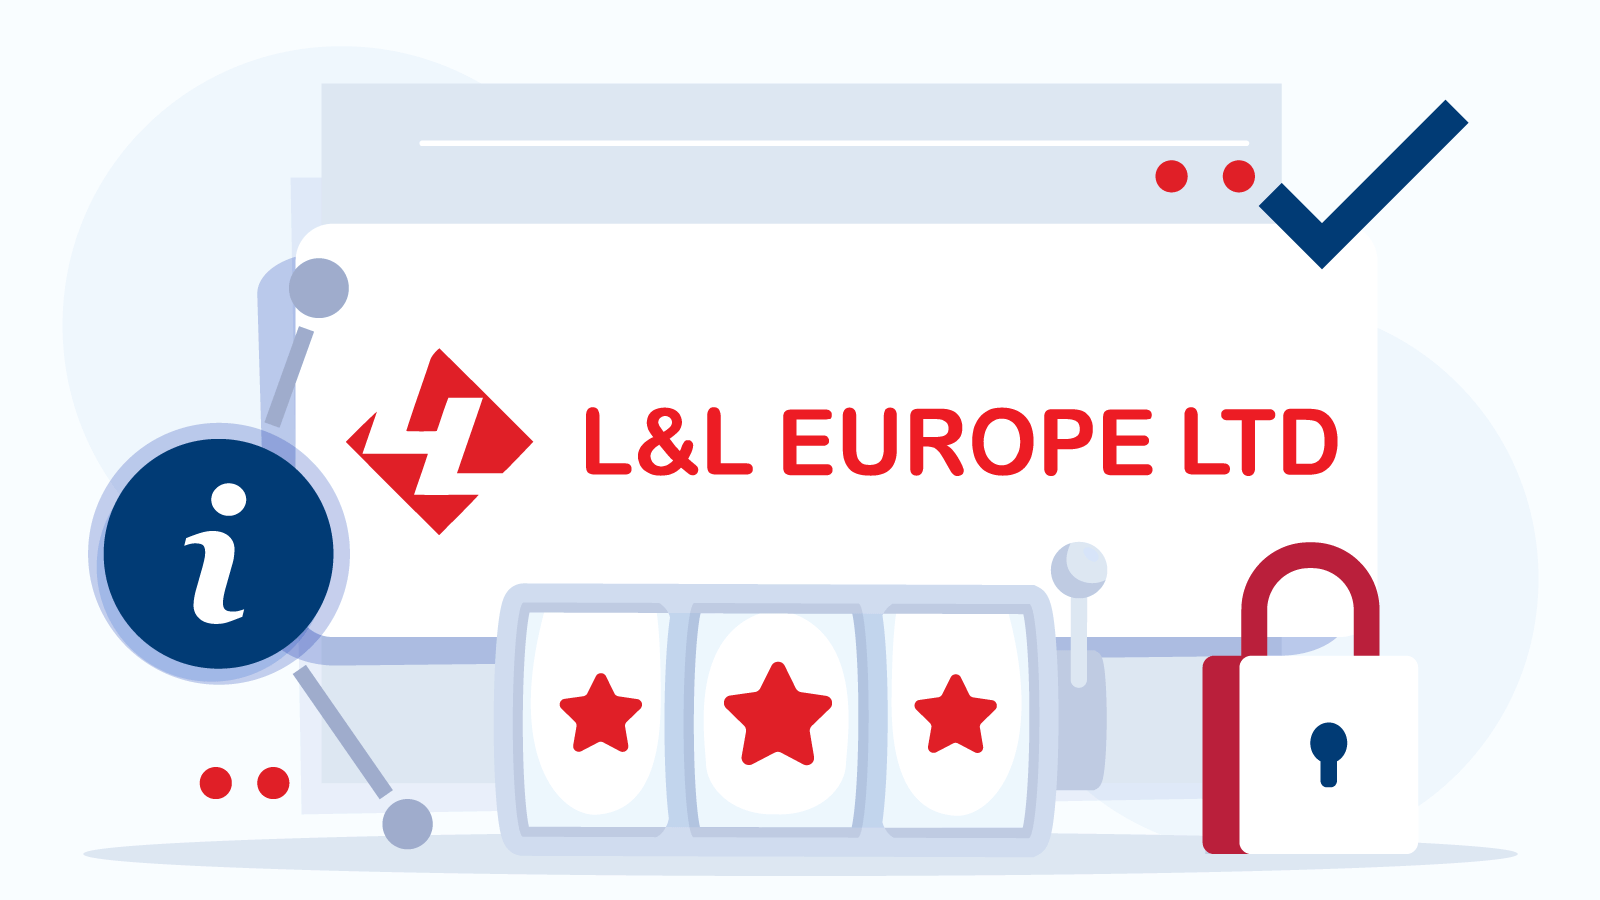 Who is L&L Europe Limited Ltd